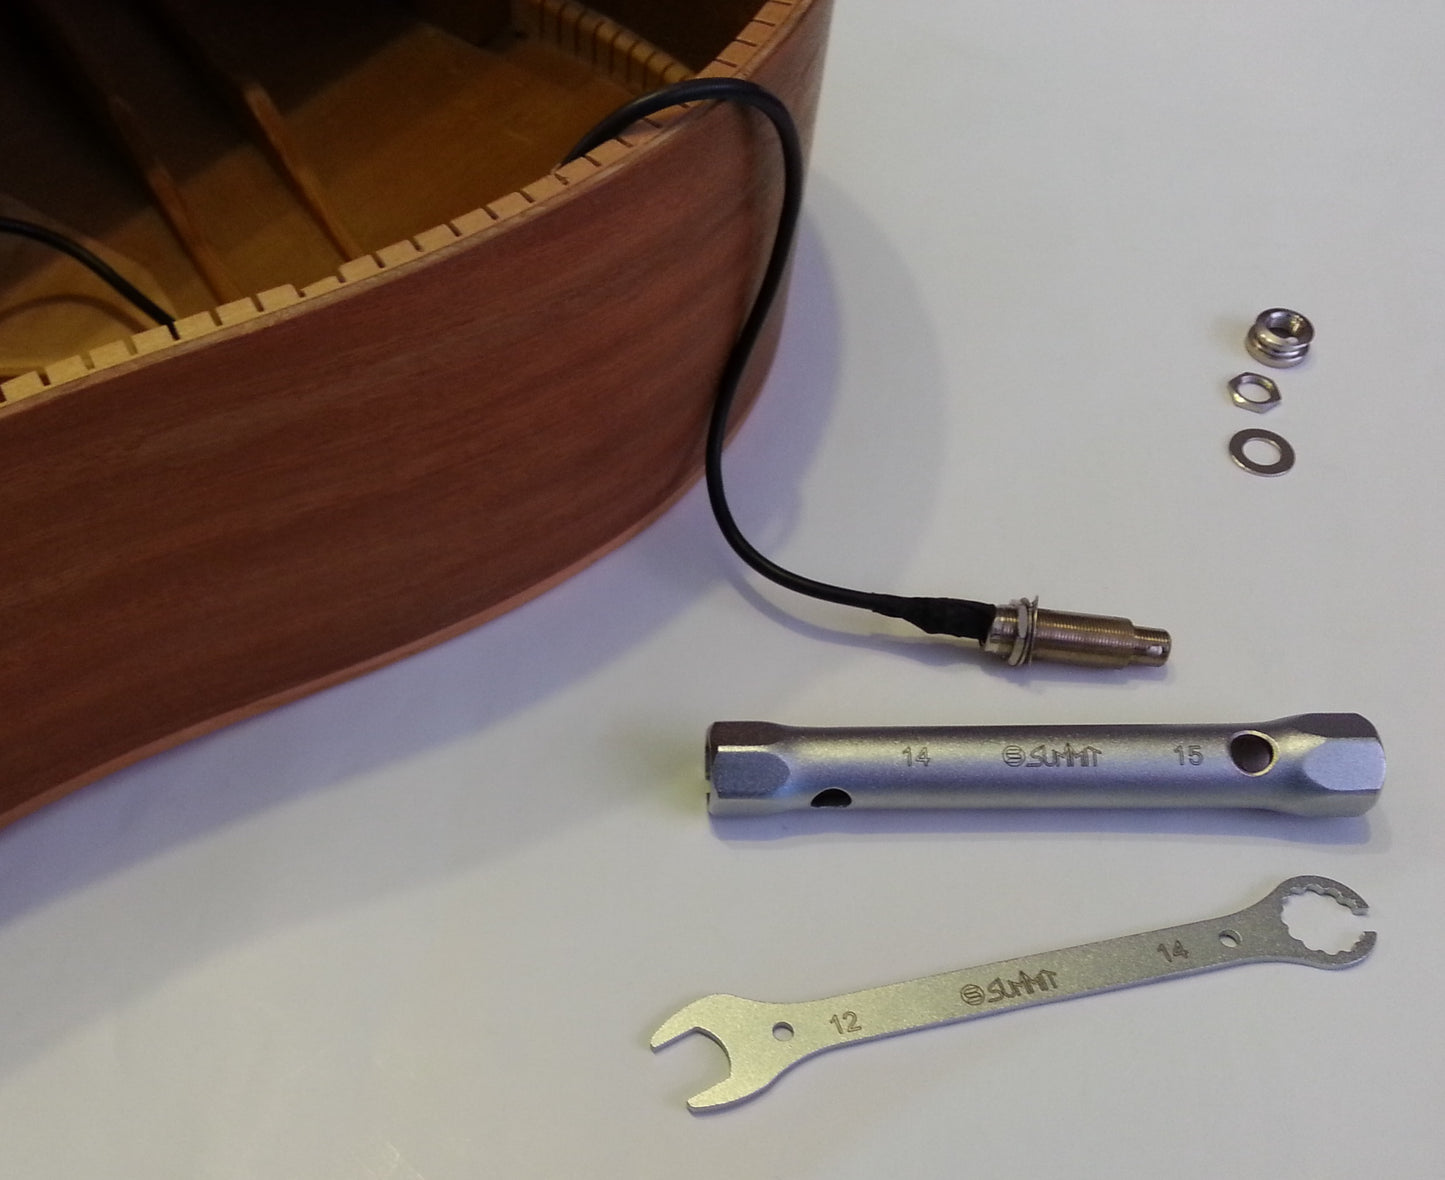 SUMMIT Professional Luthier Tubular Wrench